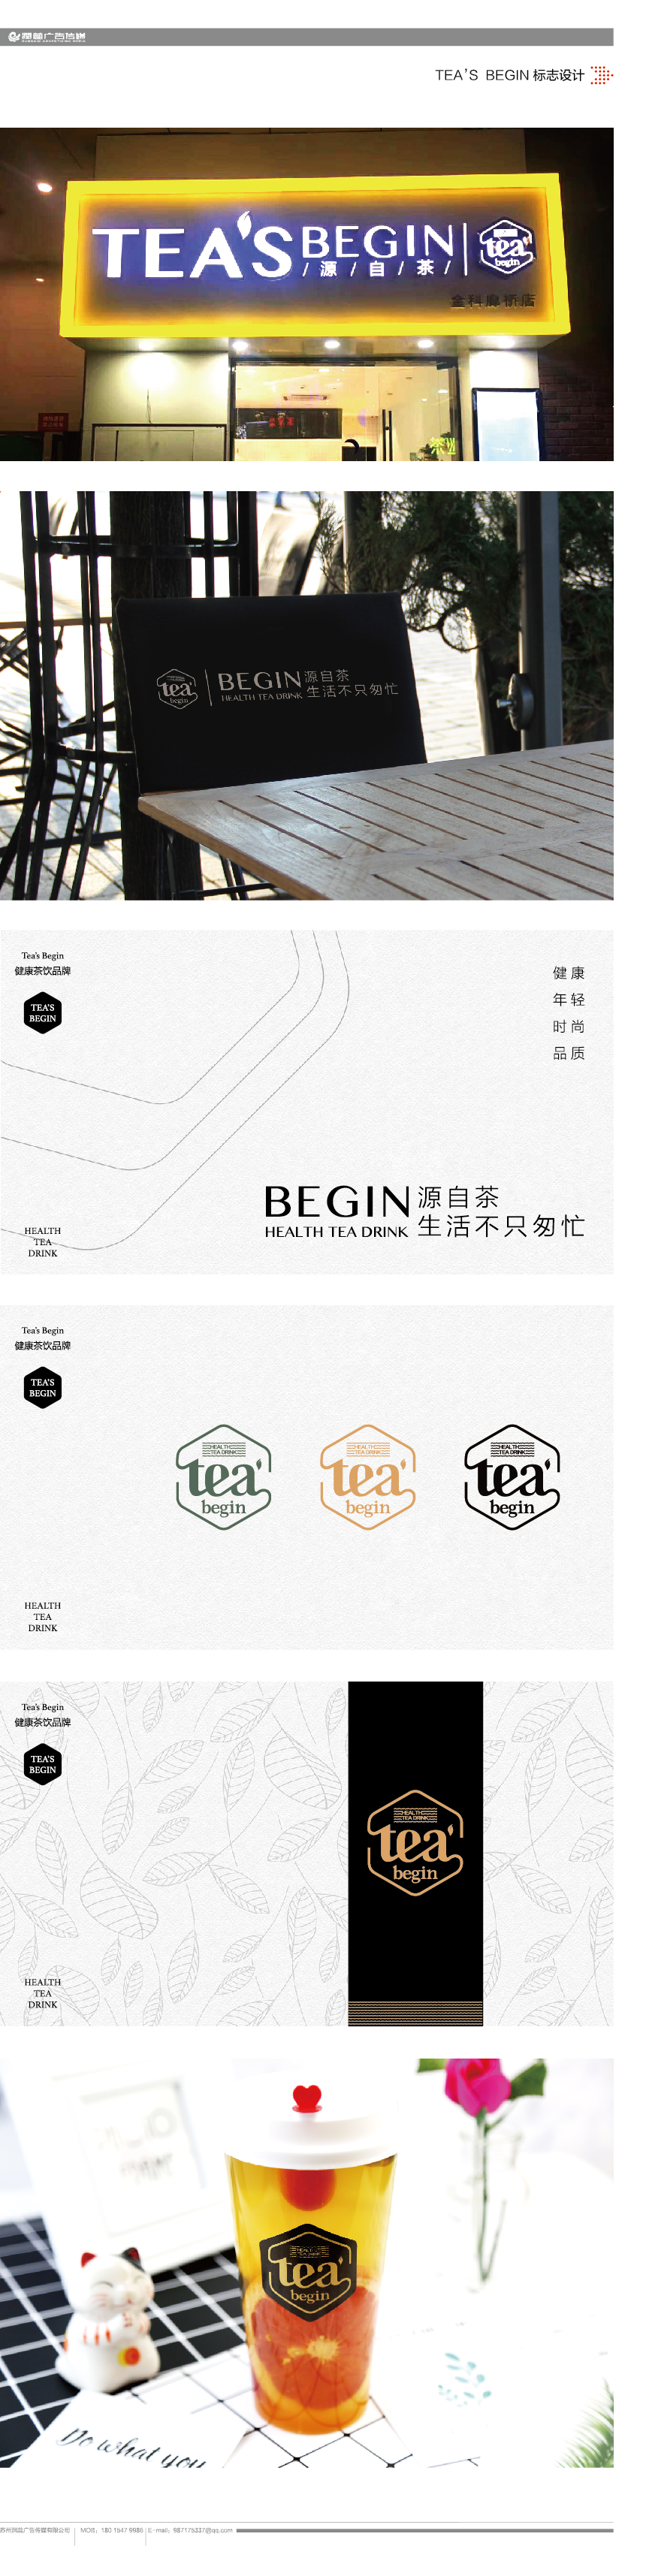 Tea's Begin品牌设计